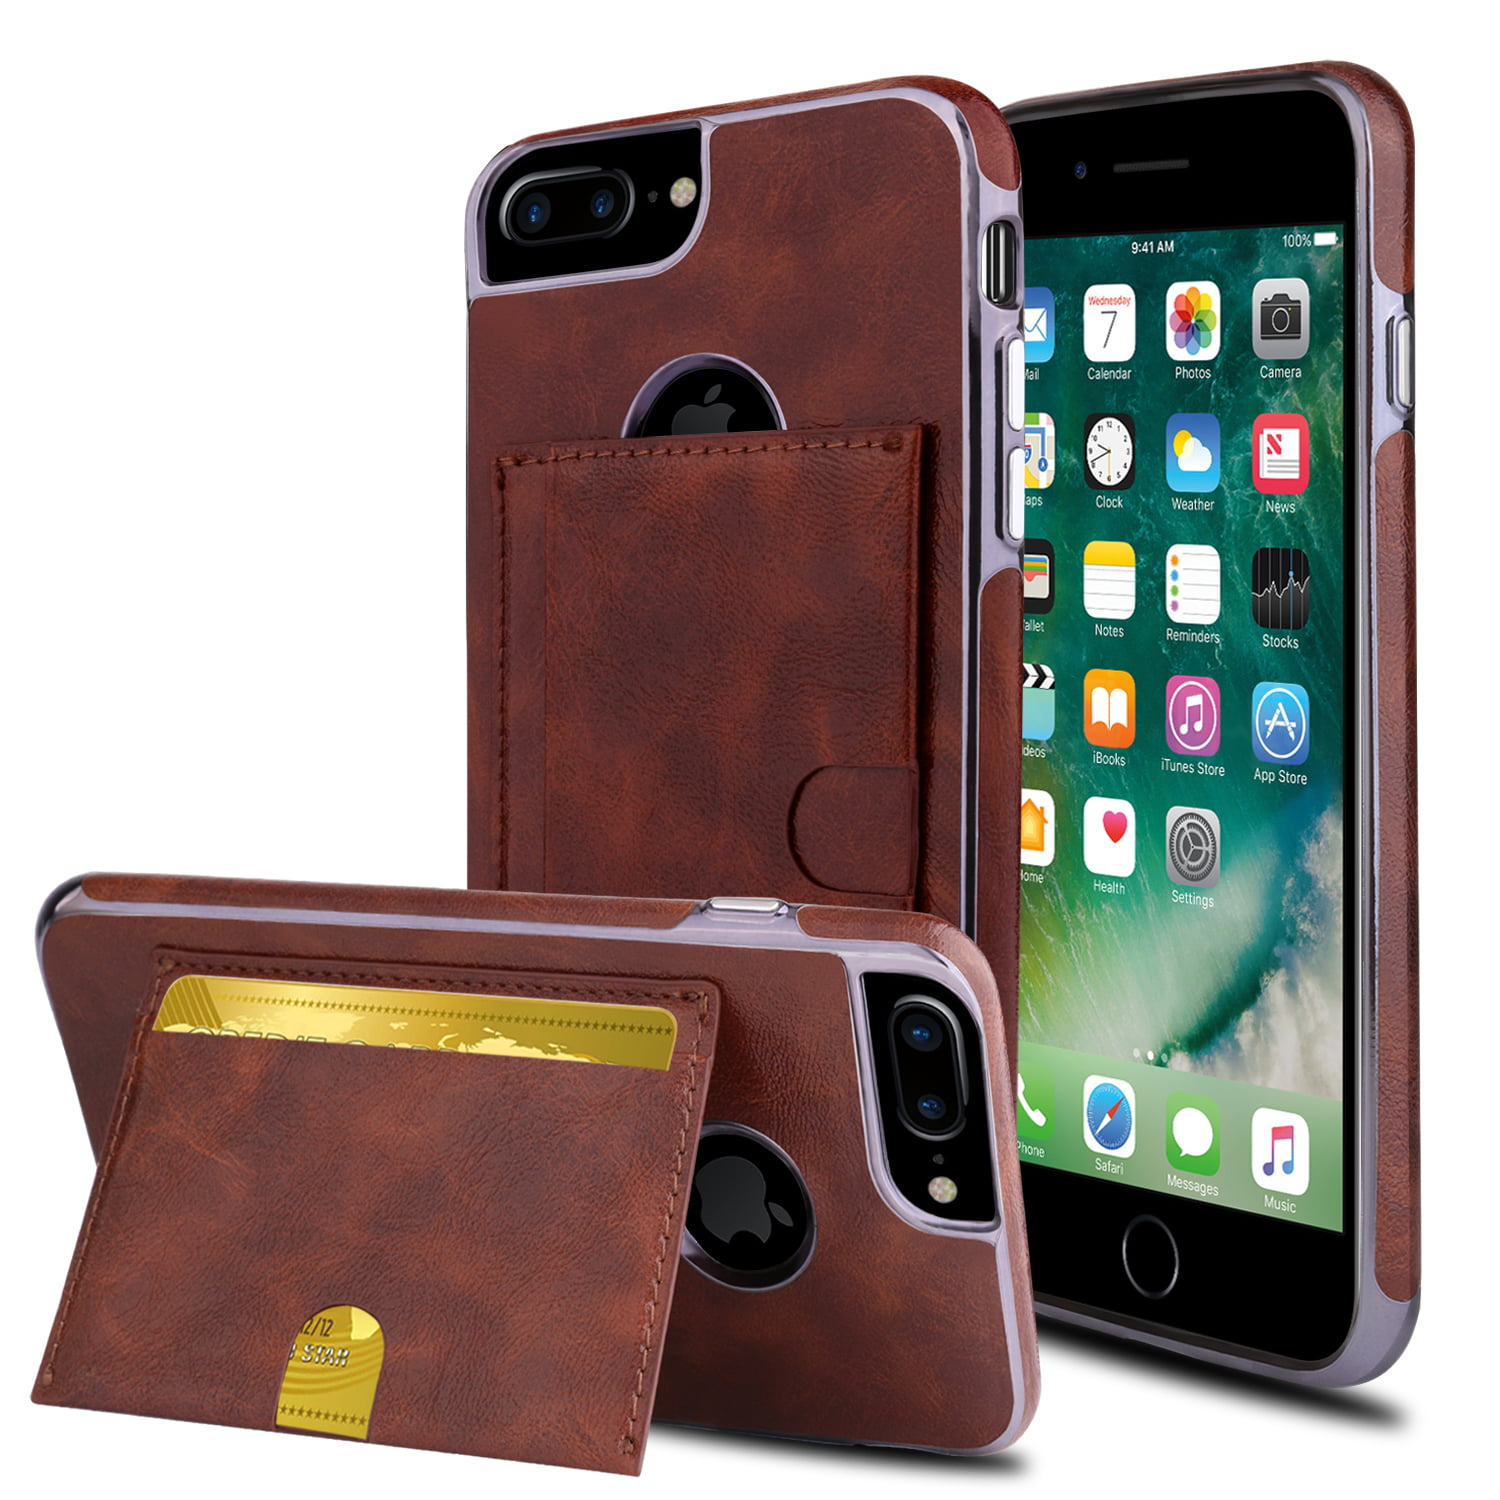 ELEGANT CHOISE Apple iPhone 8 Plus Wallet Case, [Shockproof] Ultra Slim